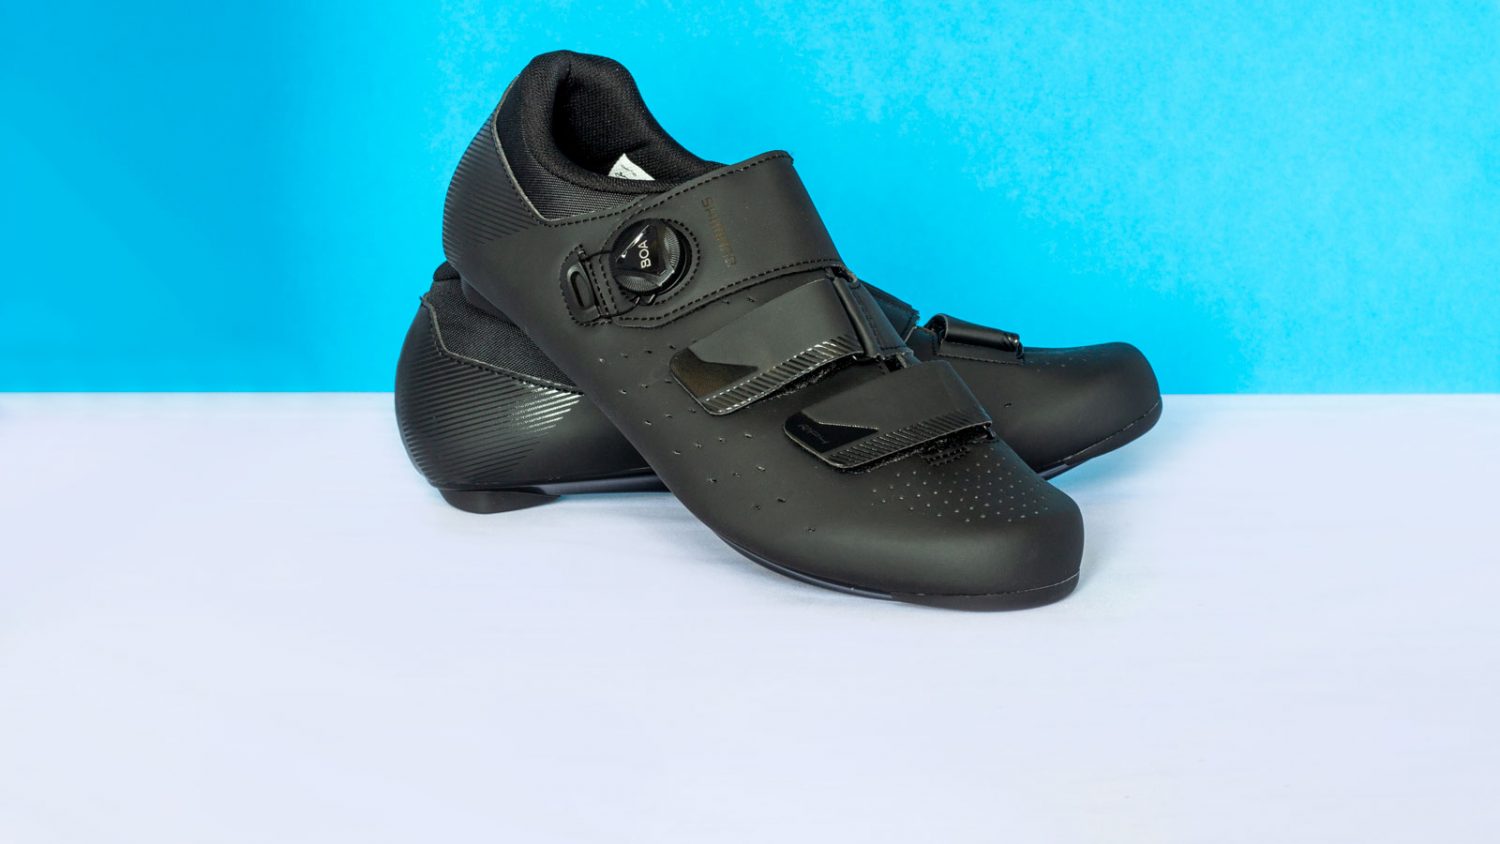 Shimano RP4 Cycling Shoes Review